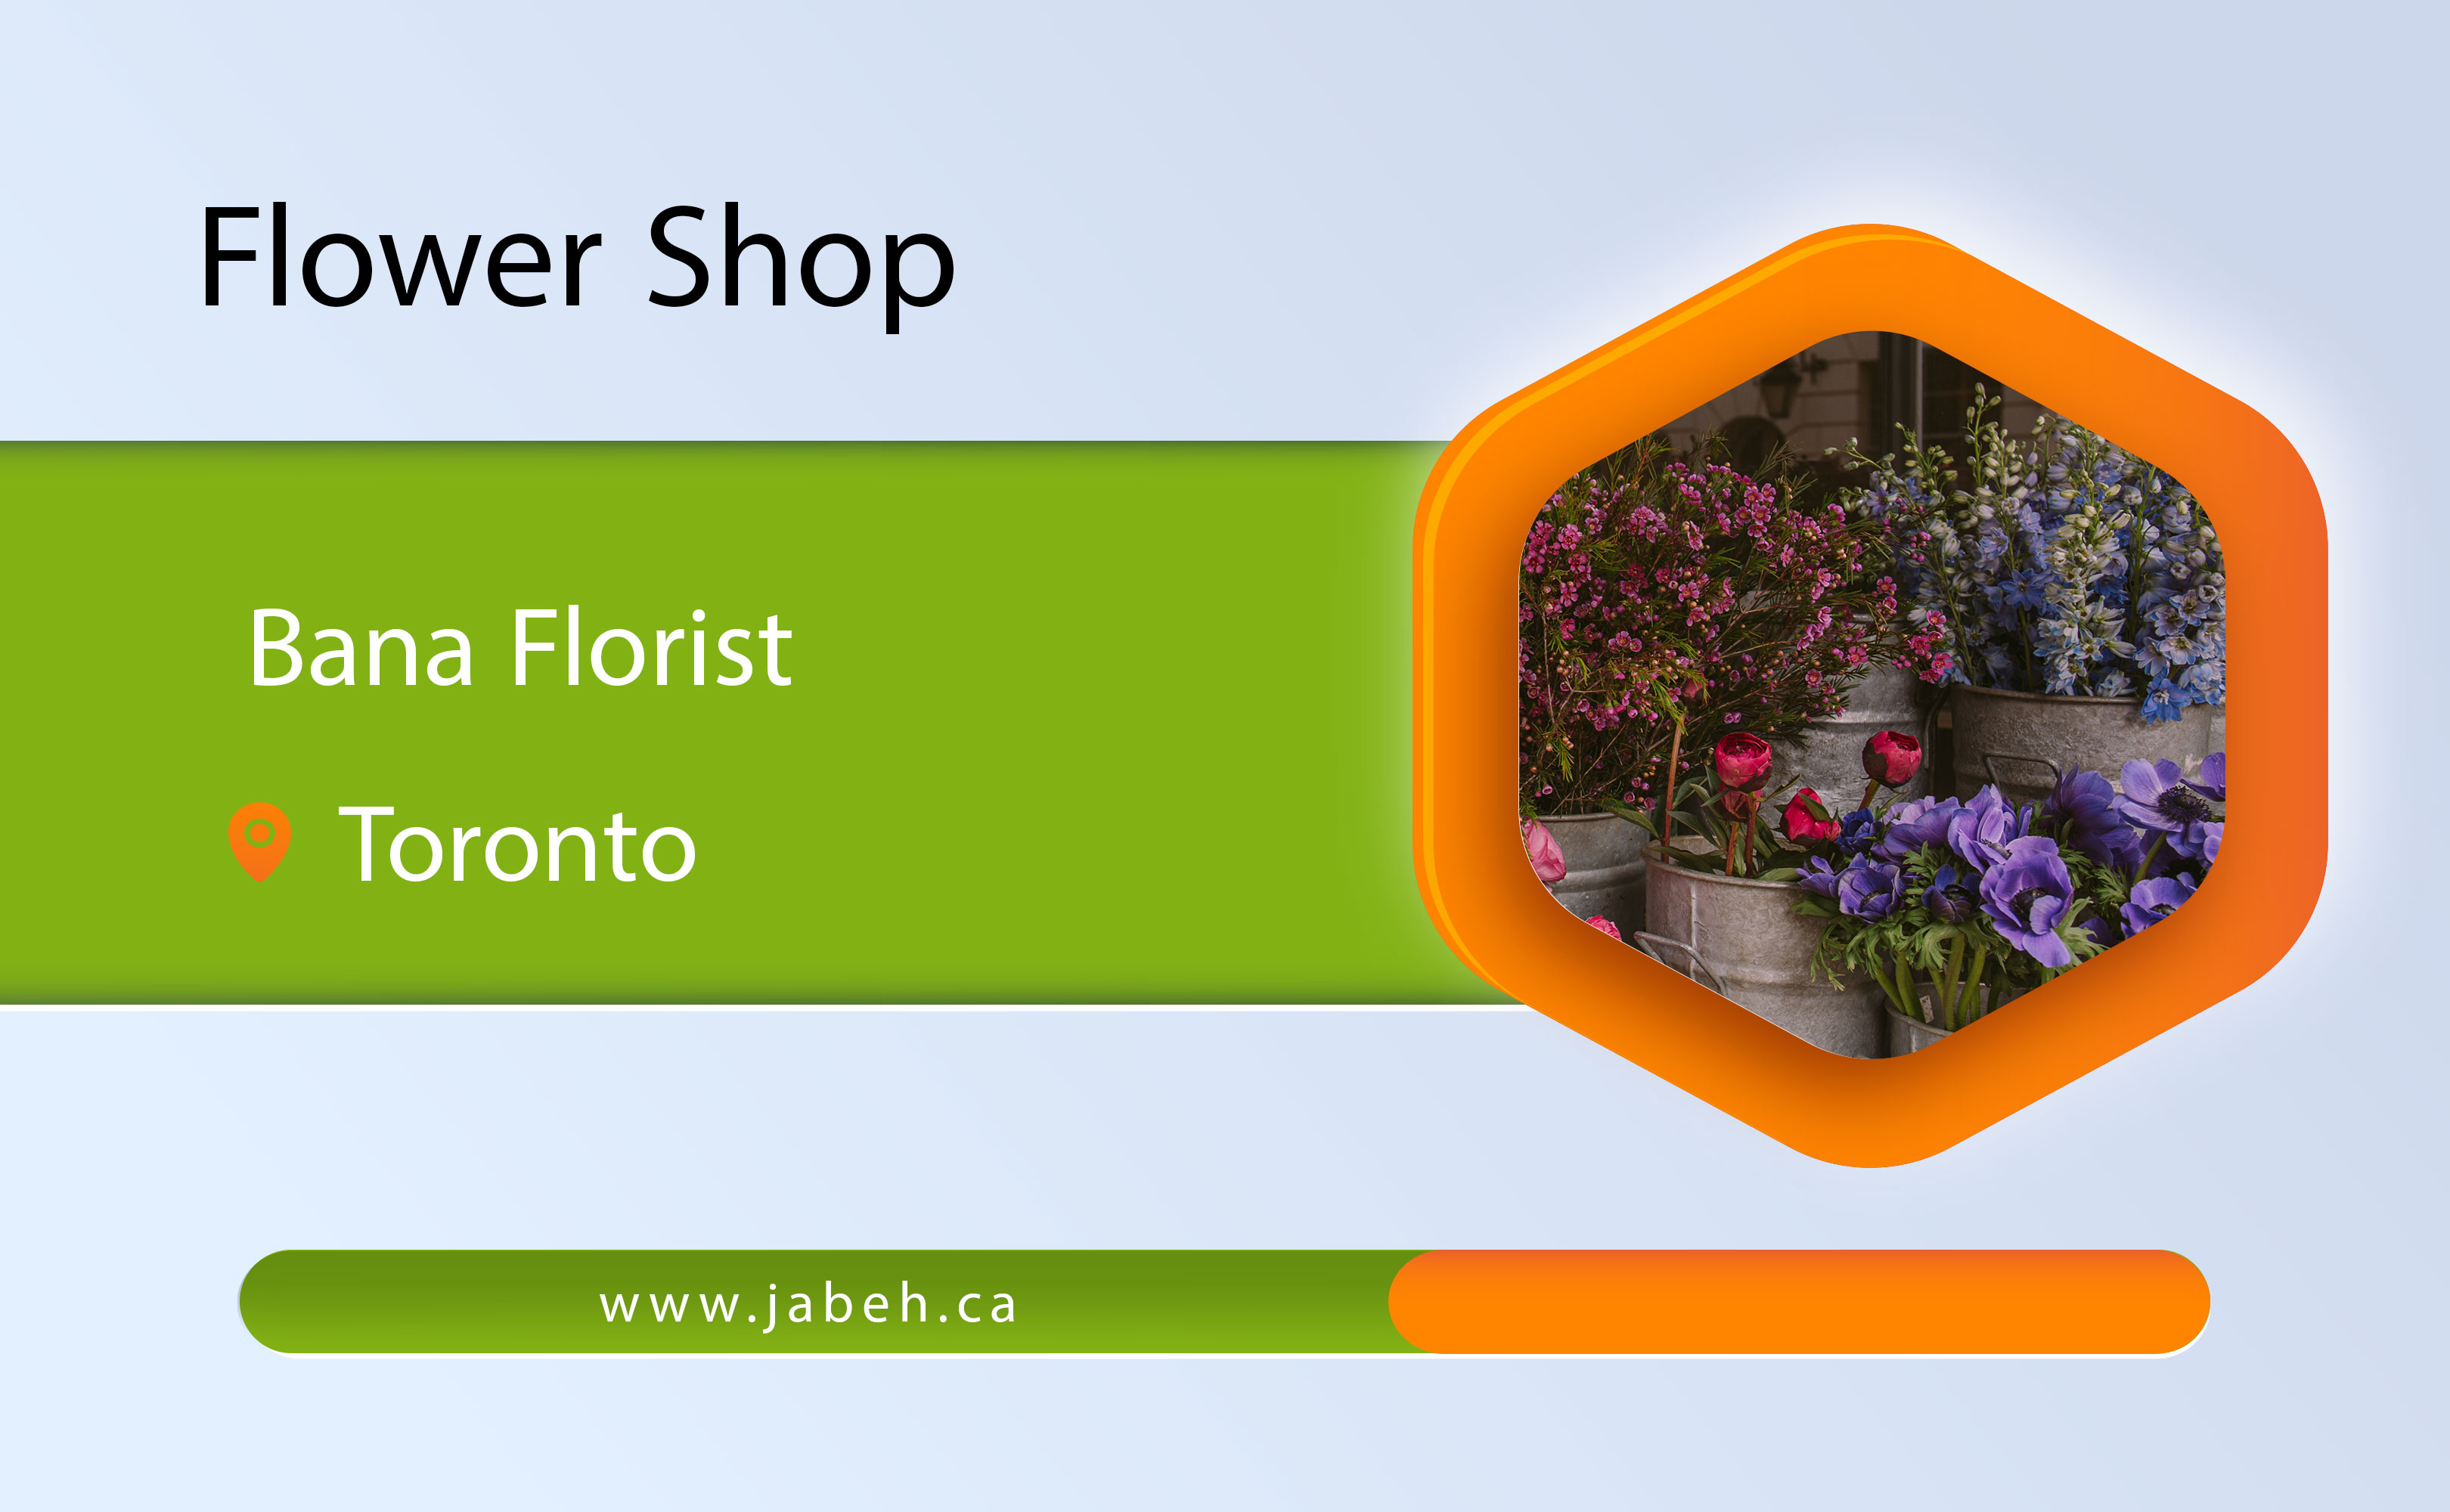 Bana Florist in Toronto